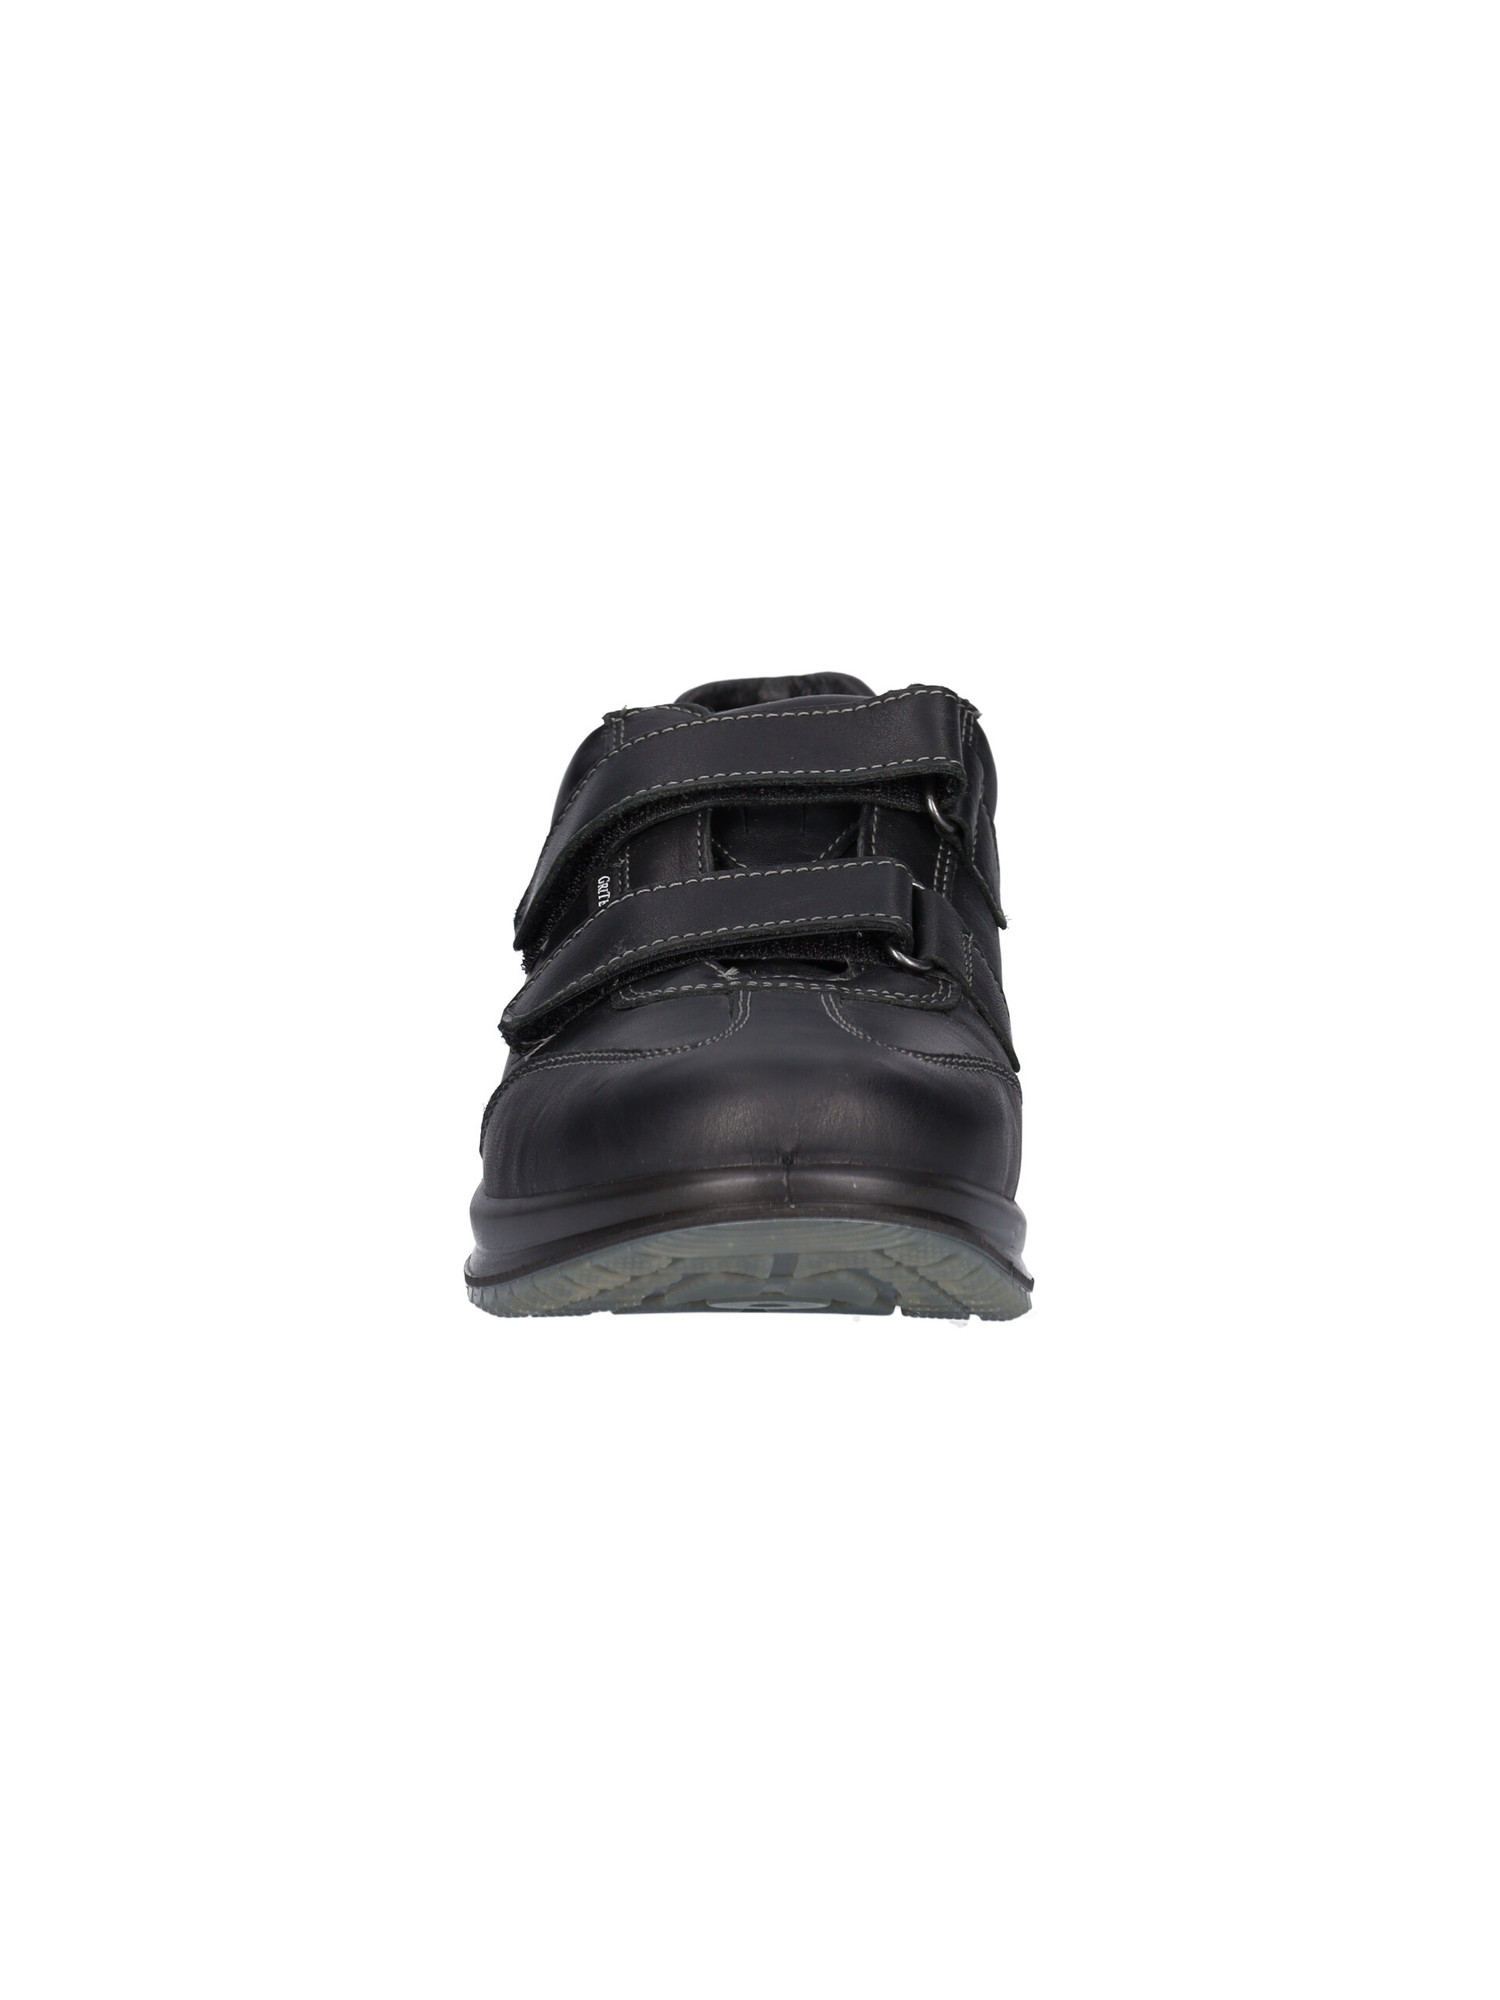 scarpa-casual-grisport-active-da-uomo-nera-845fb7